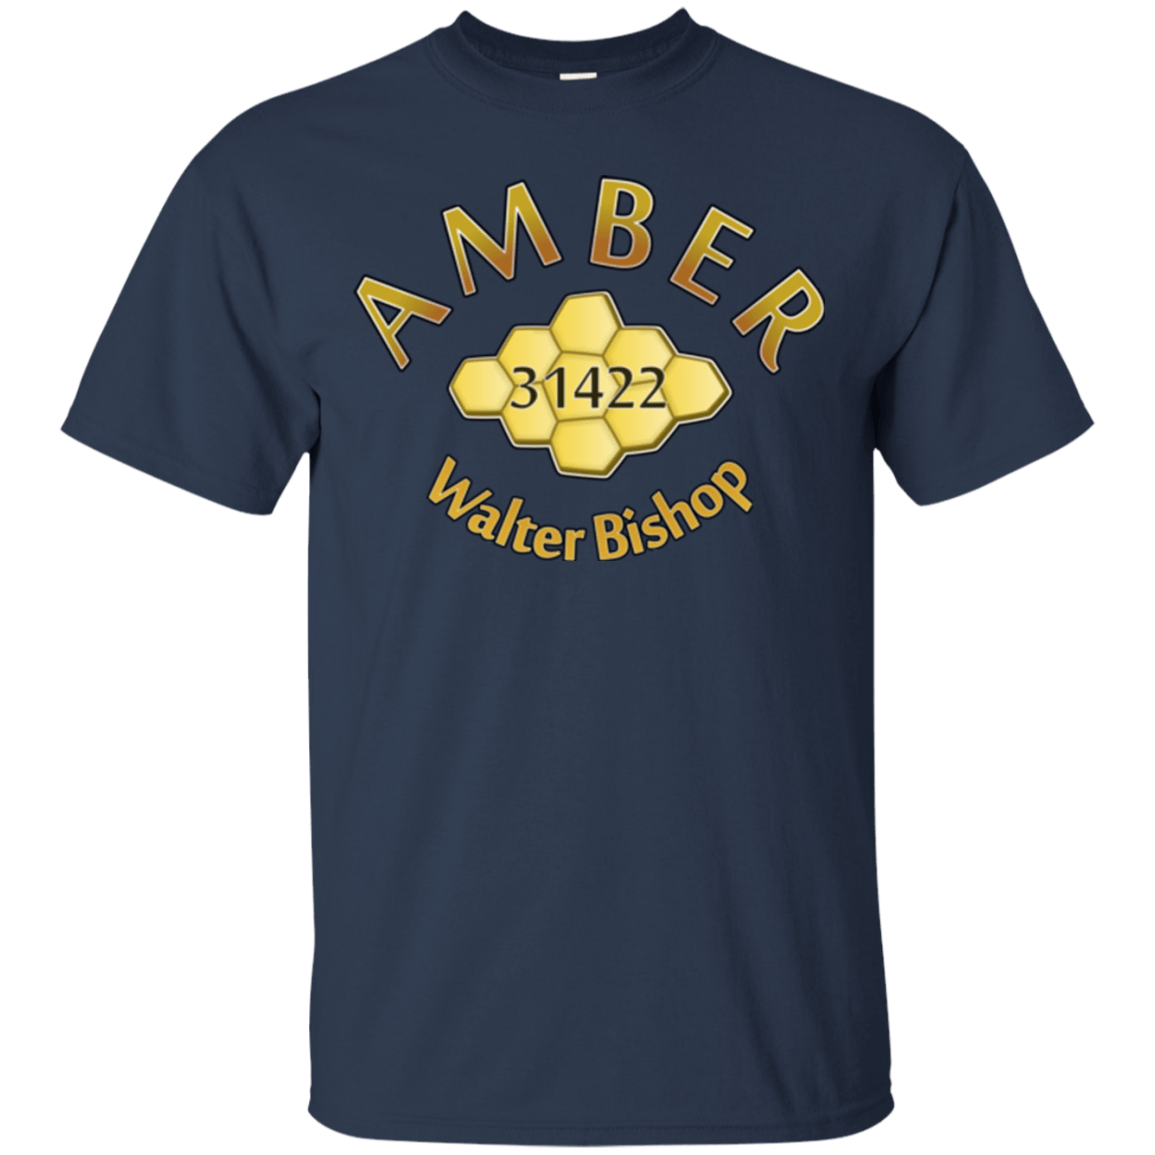 T-Shirts Navy / Small Amber T-Shirt